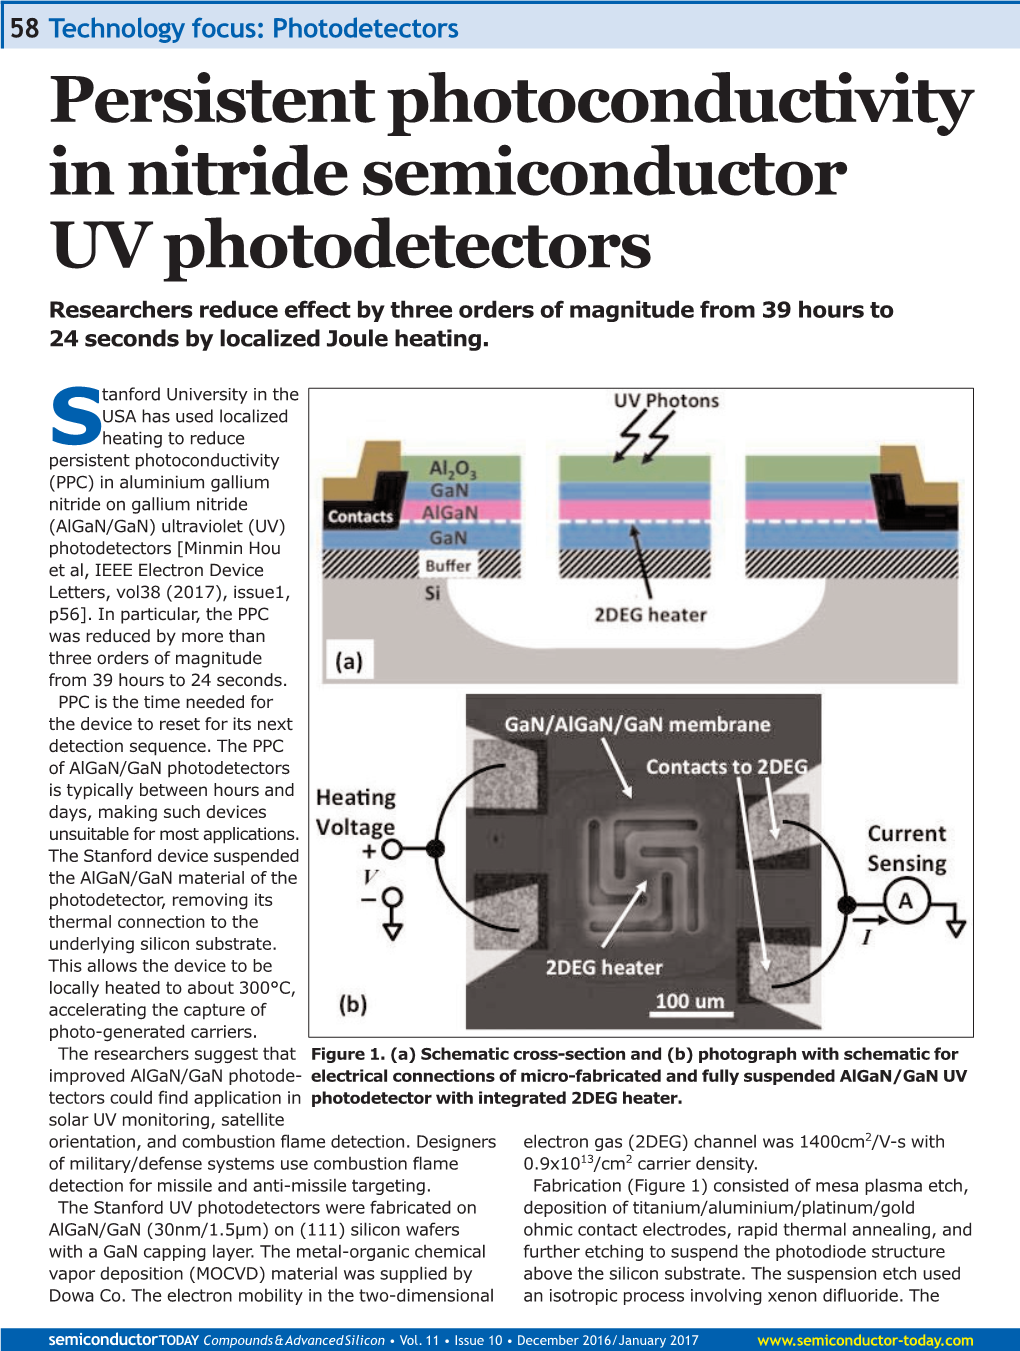 Persistent Photoconductivity in Nitride Semiconductor UV Photodetectors